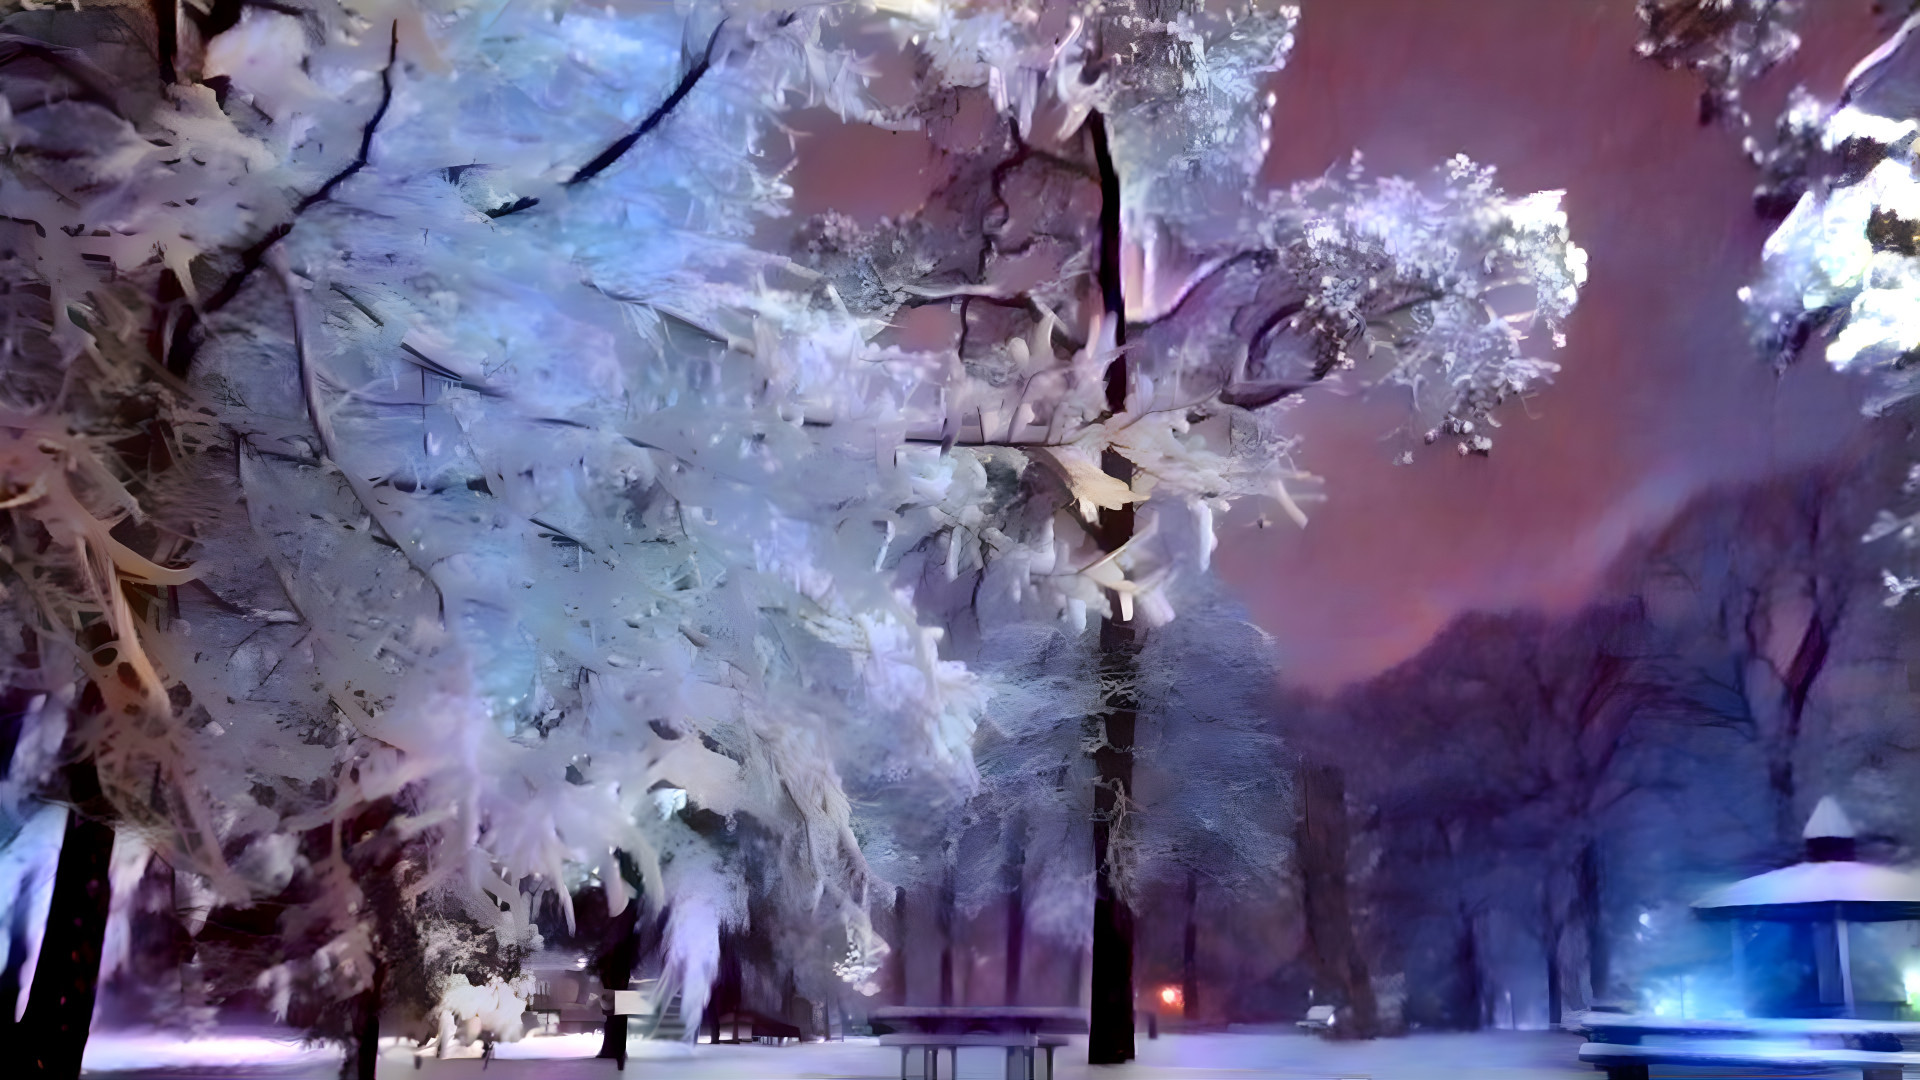 Nighttime Snow - Winter Wonderland